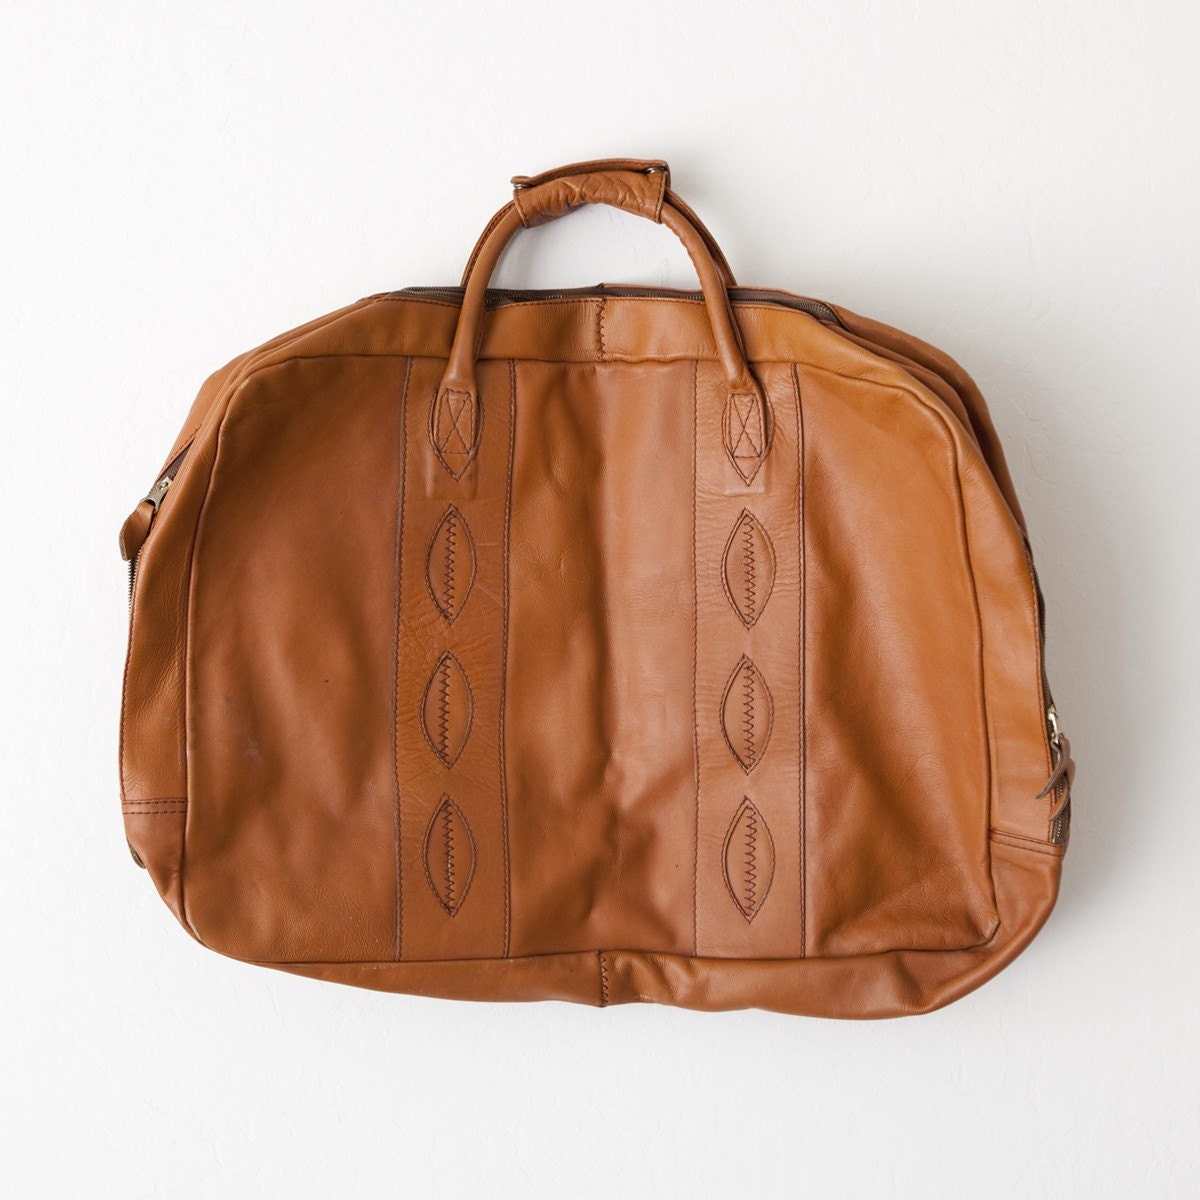 SALE 70s Leaf Leather Duffel Bag Large by seesawvintage on Etsy